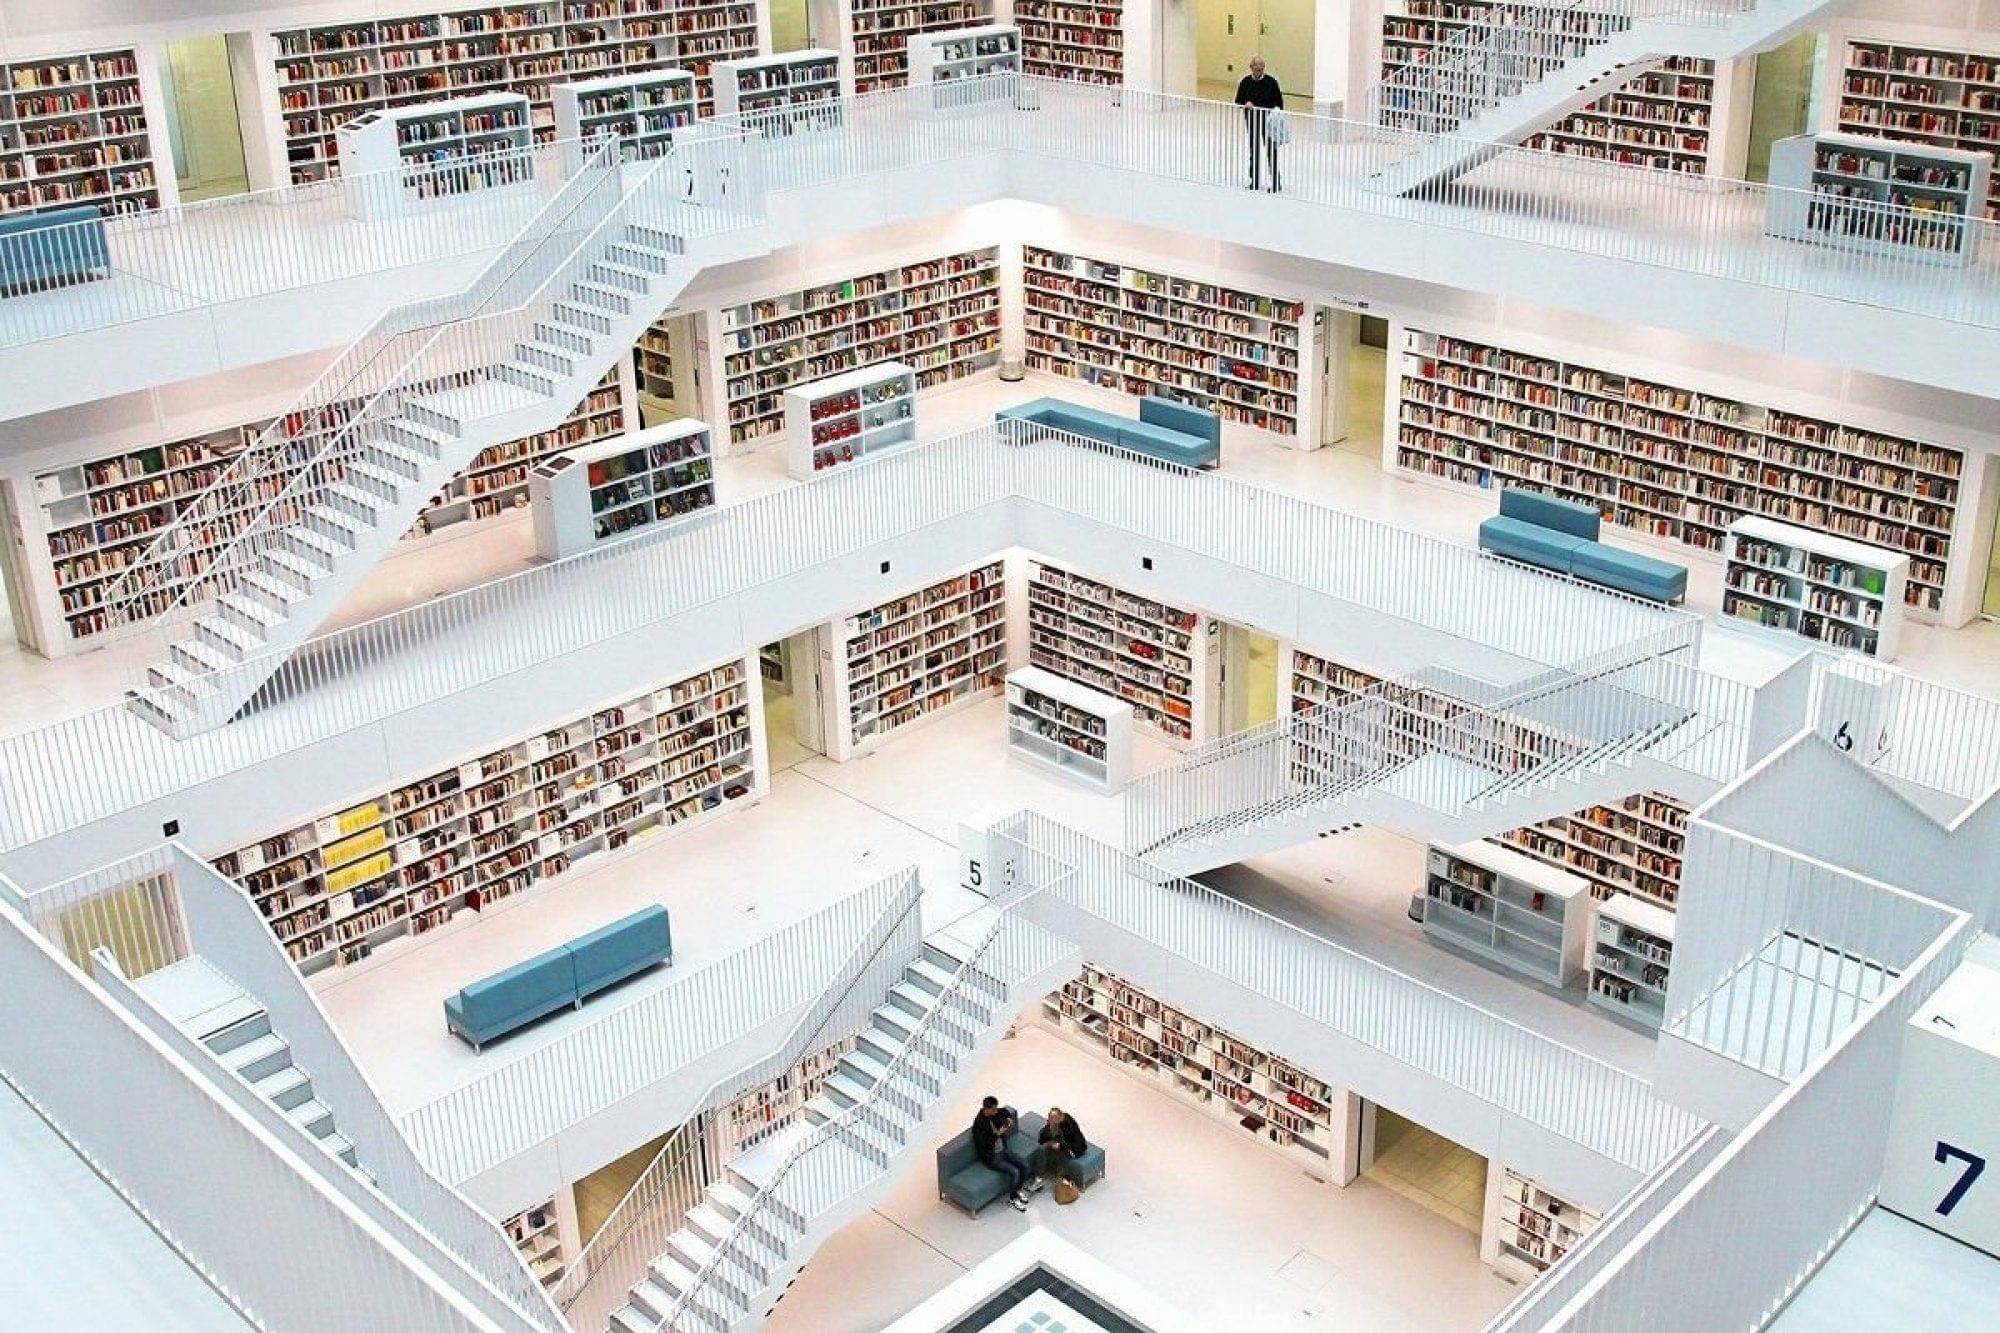 Library урок. Городская библиотека Штутгарта. Штутгартская городская библиотека, Германия. Библиотека в Штутгарте Германия. Штадт библиотека Штутгарта.